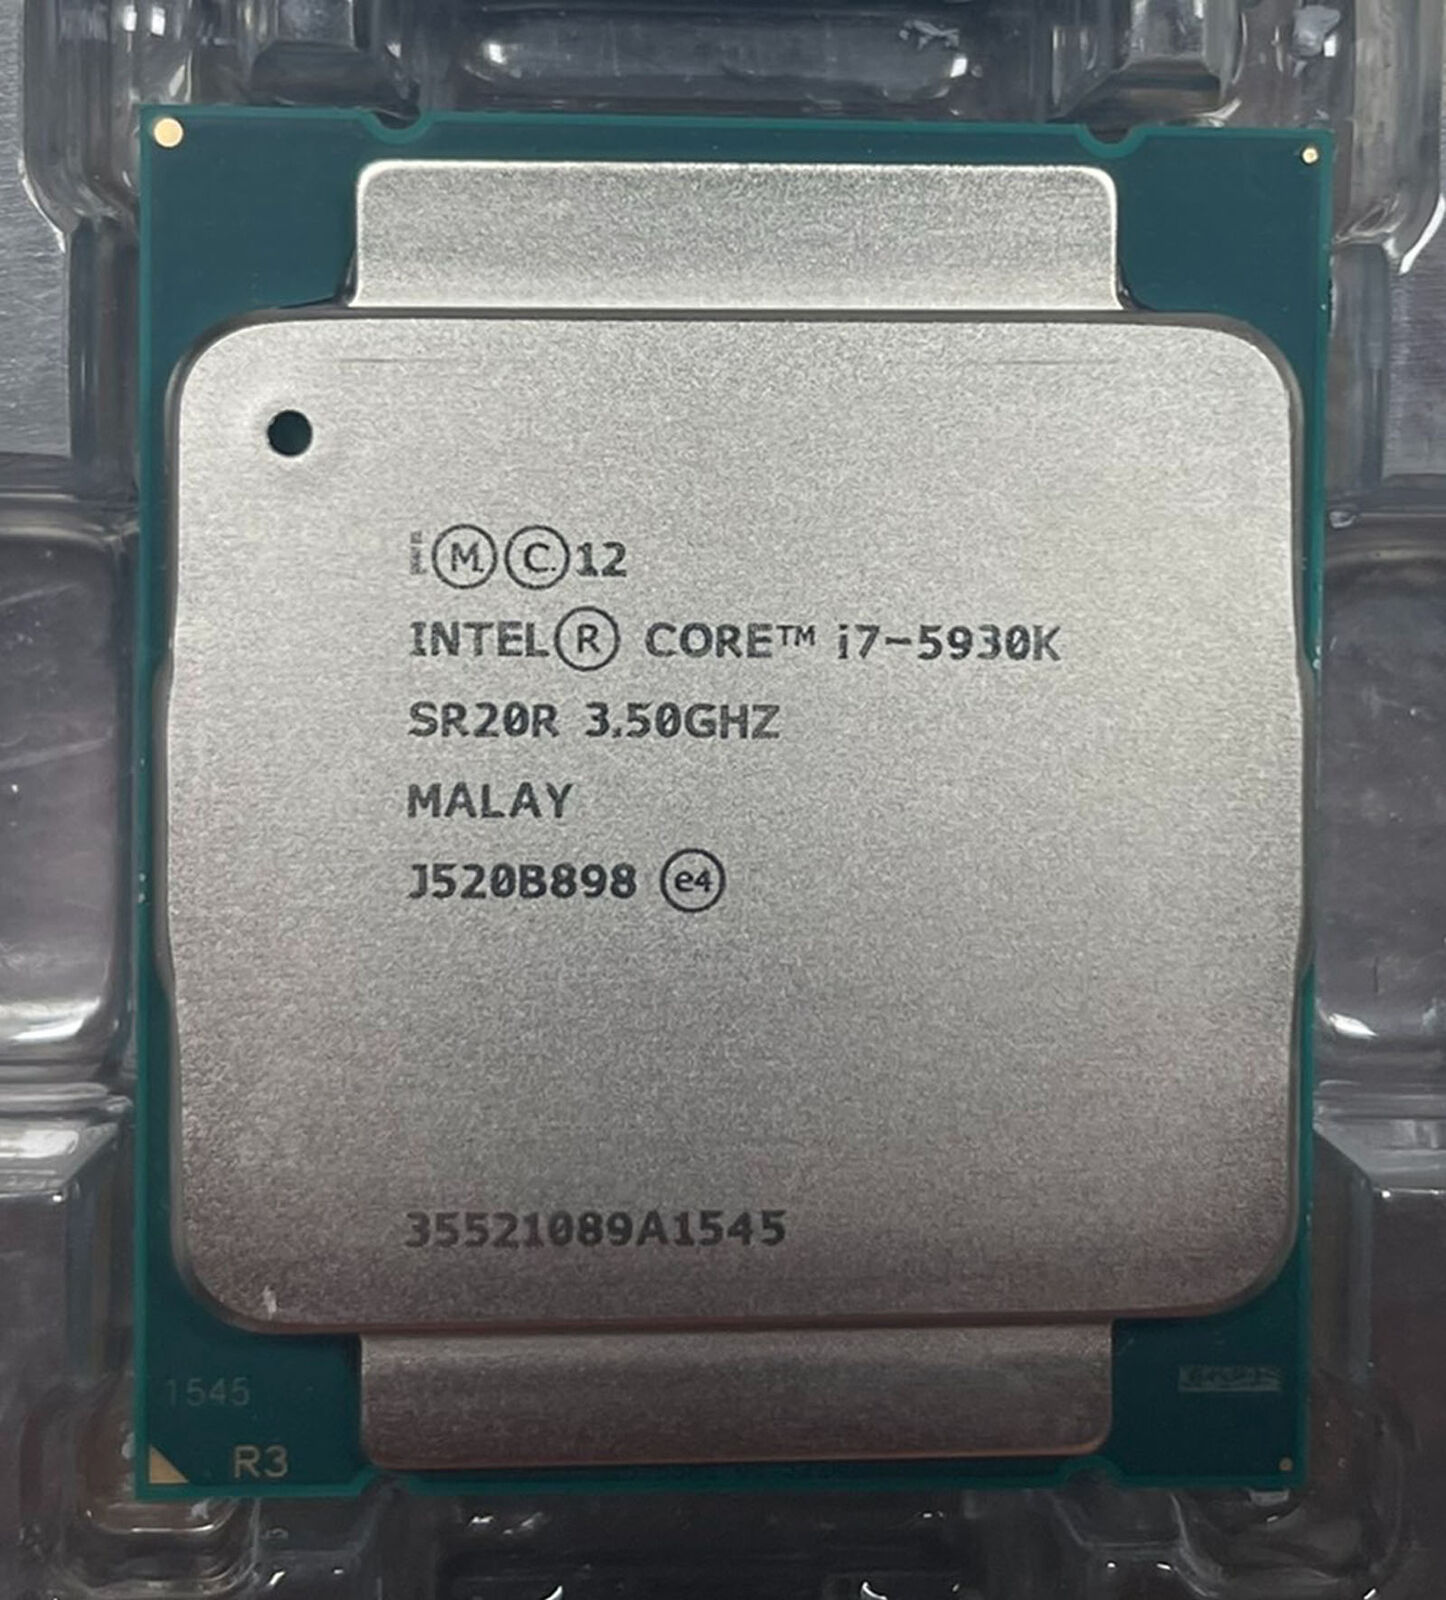 Intel Core i7-5930K 6-core 140W 15MB 3.50GHz LGA-2011 CPU processor